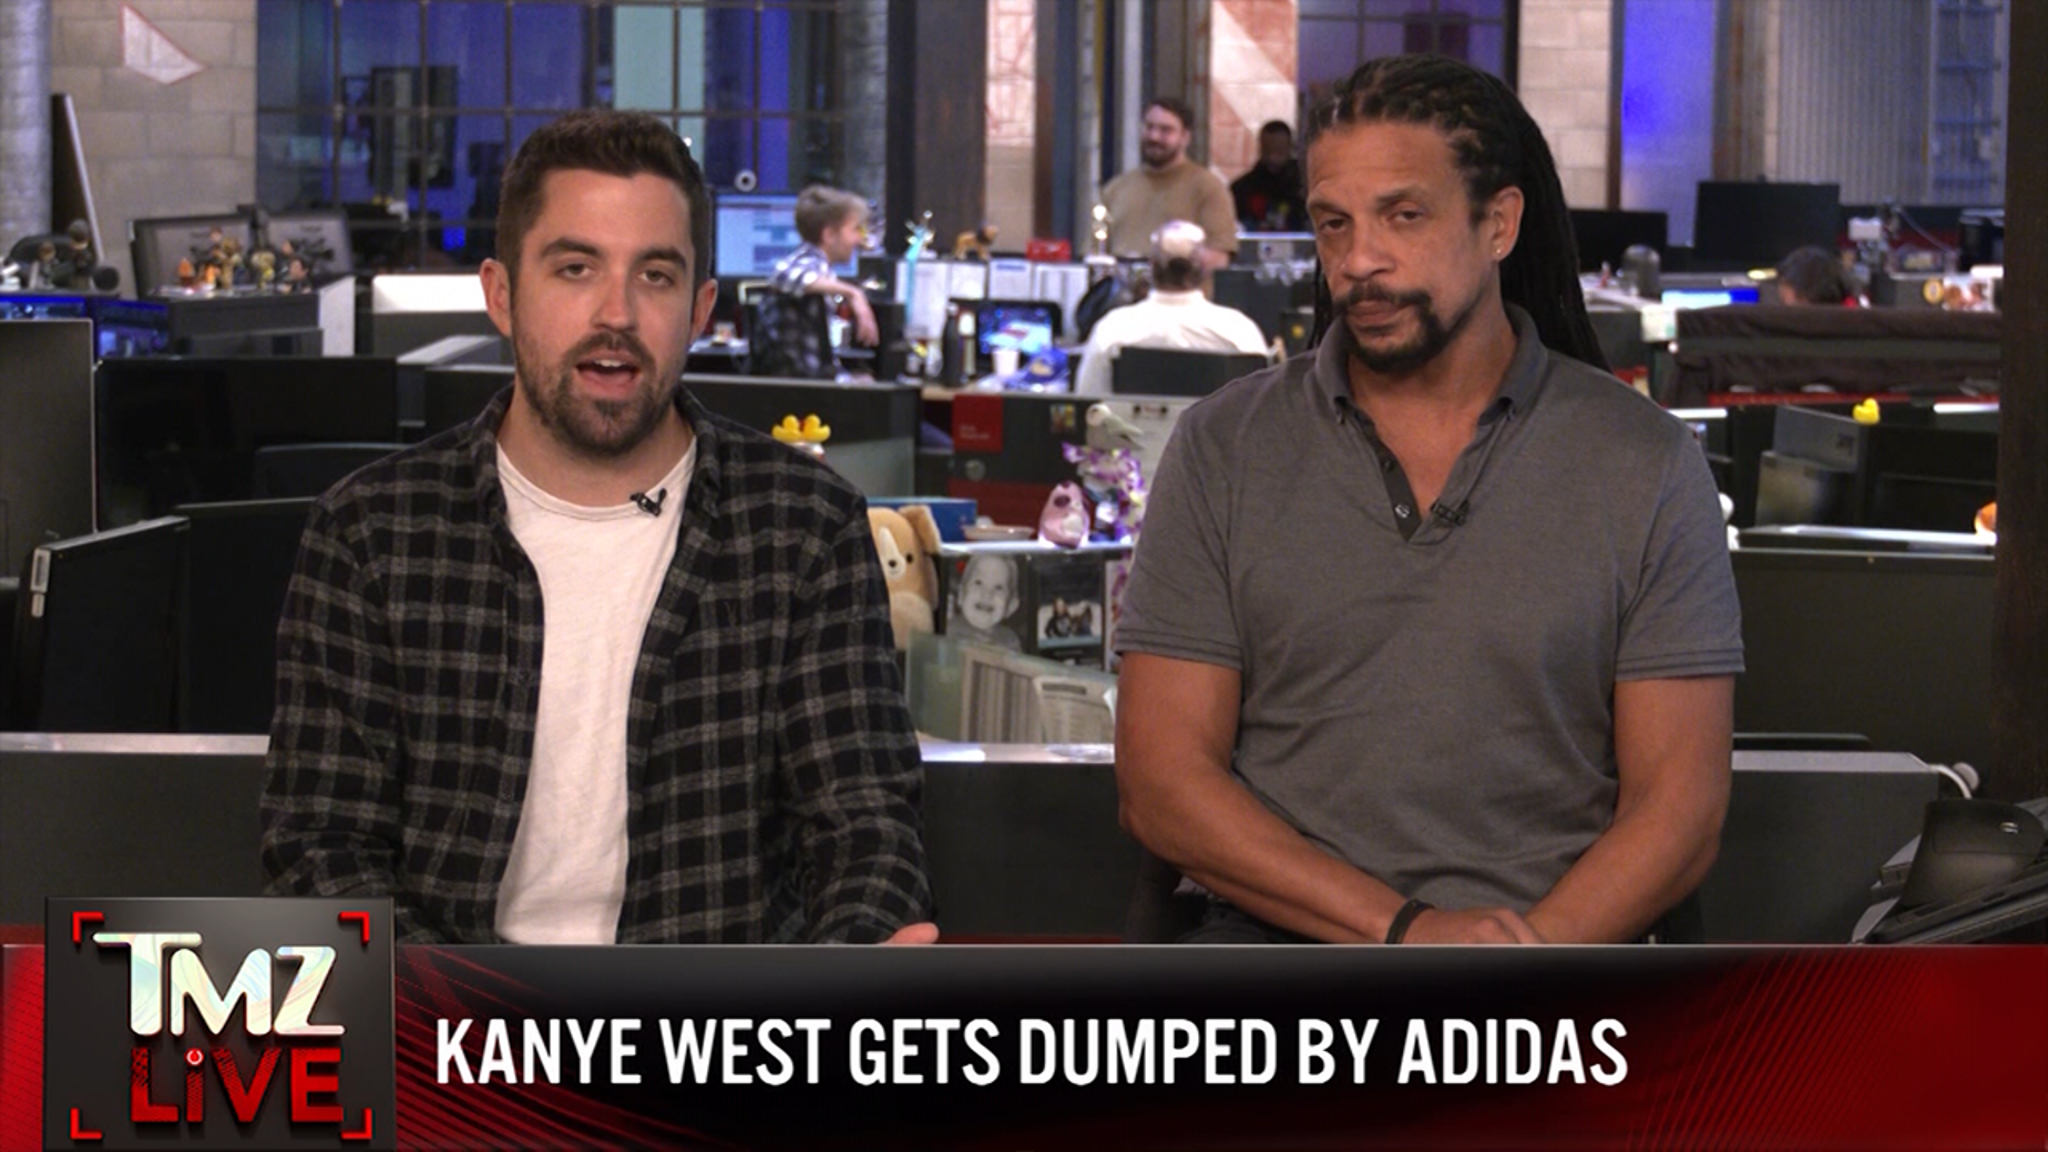 How the Samba saved Adidas after the Kanye West fiasco